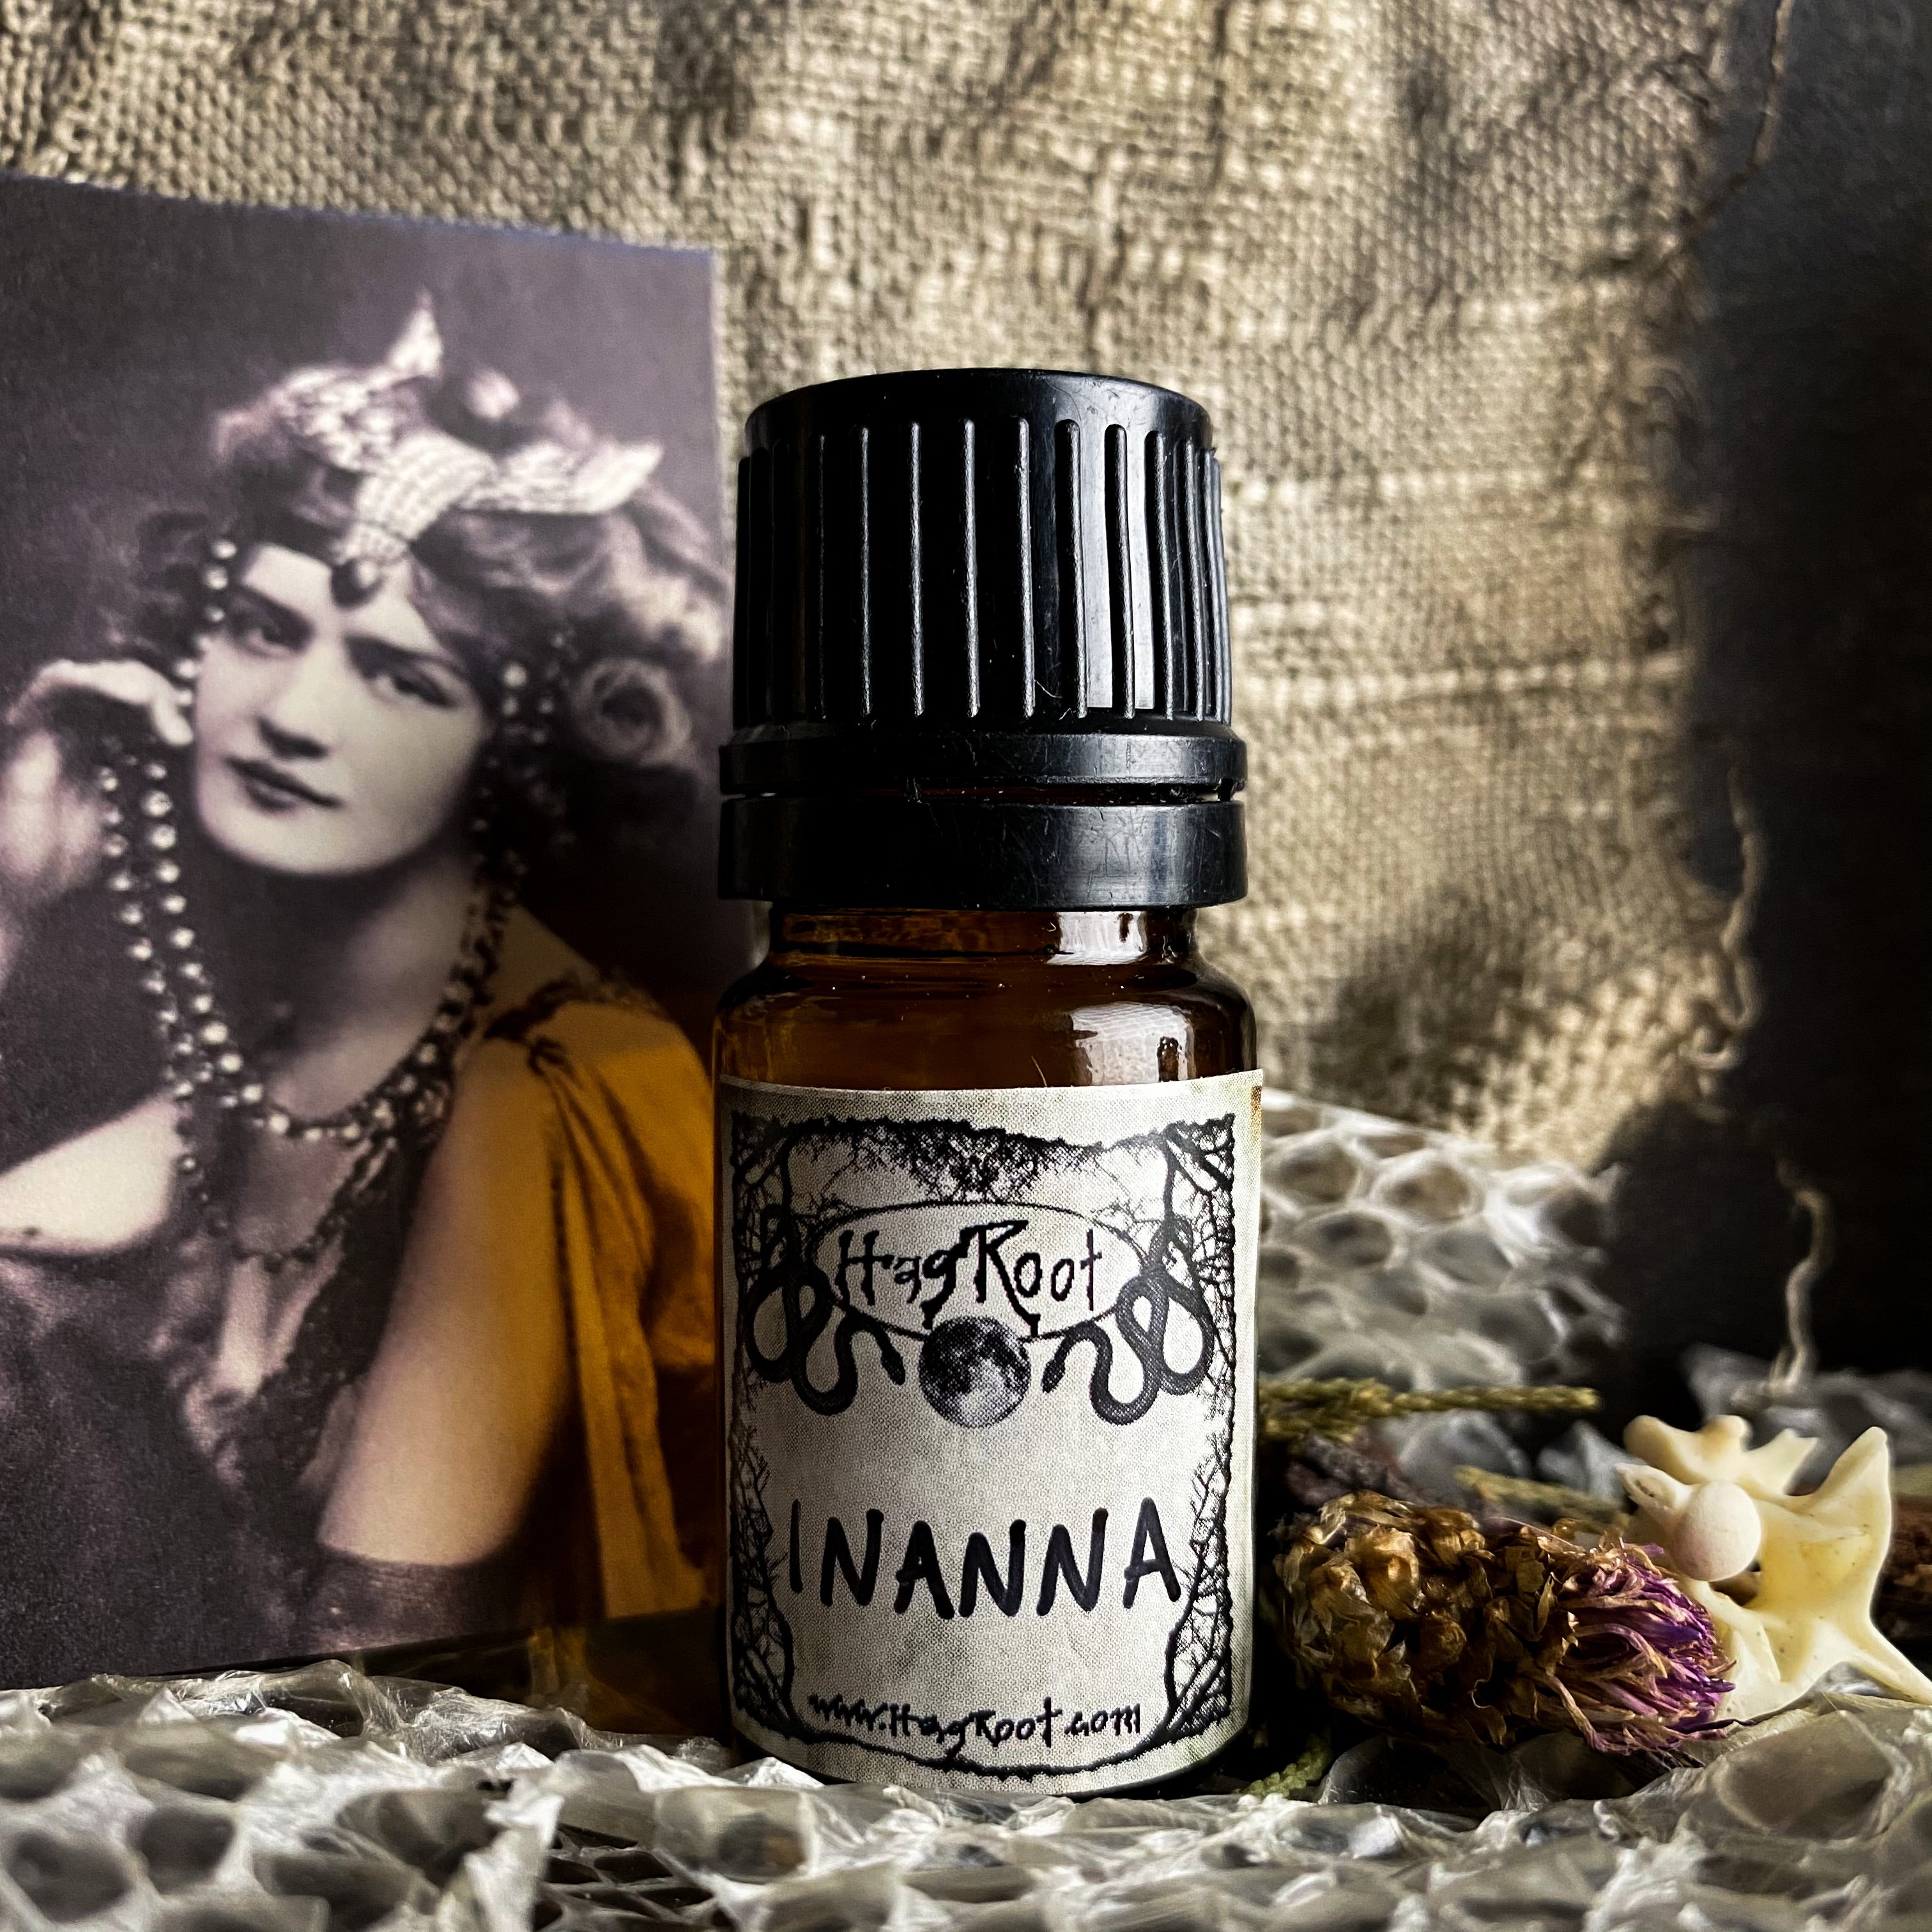 Vanilla & Amber - Perfume Oil